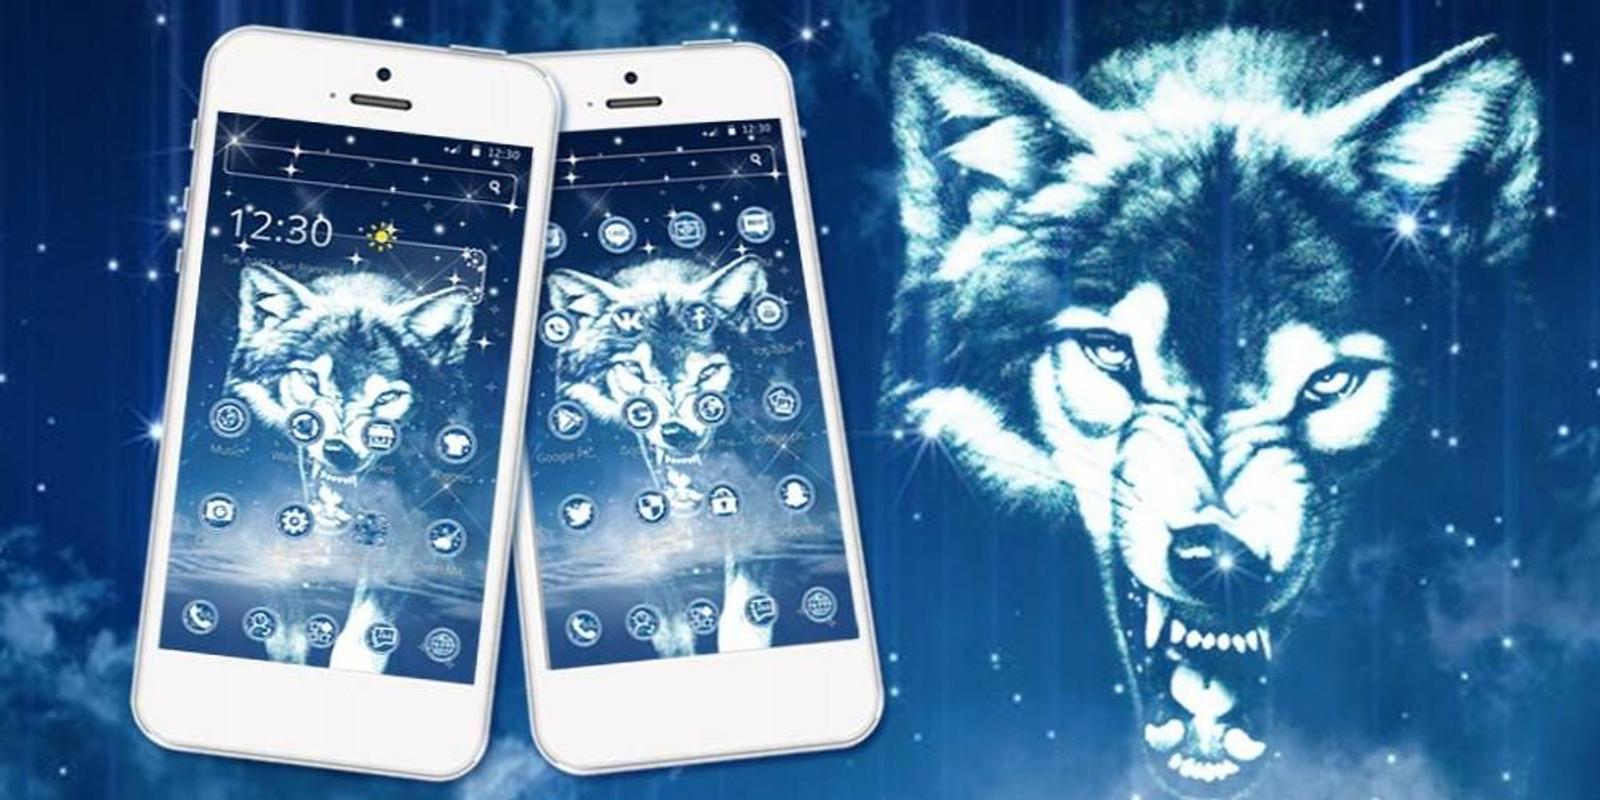 Keren Serigala Bintang For Android APK Download